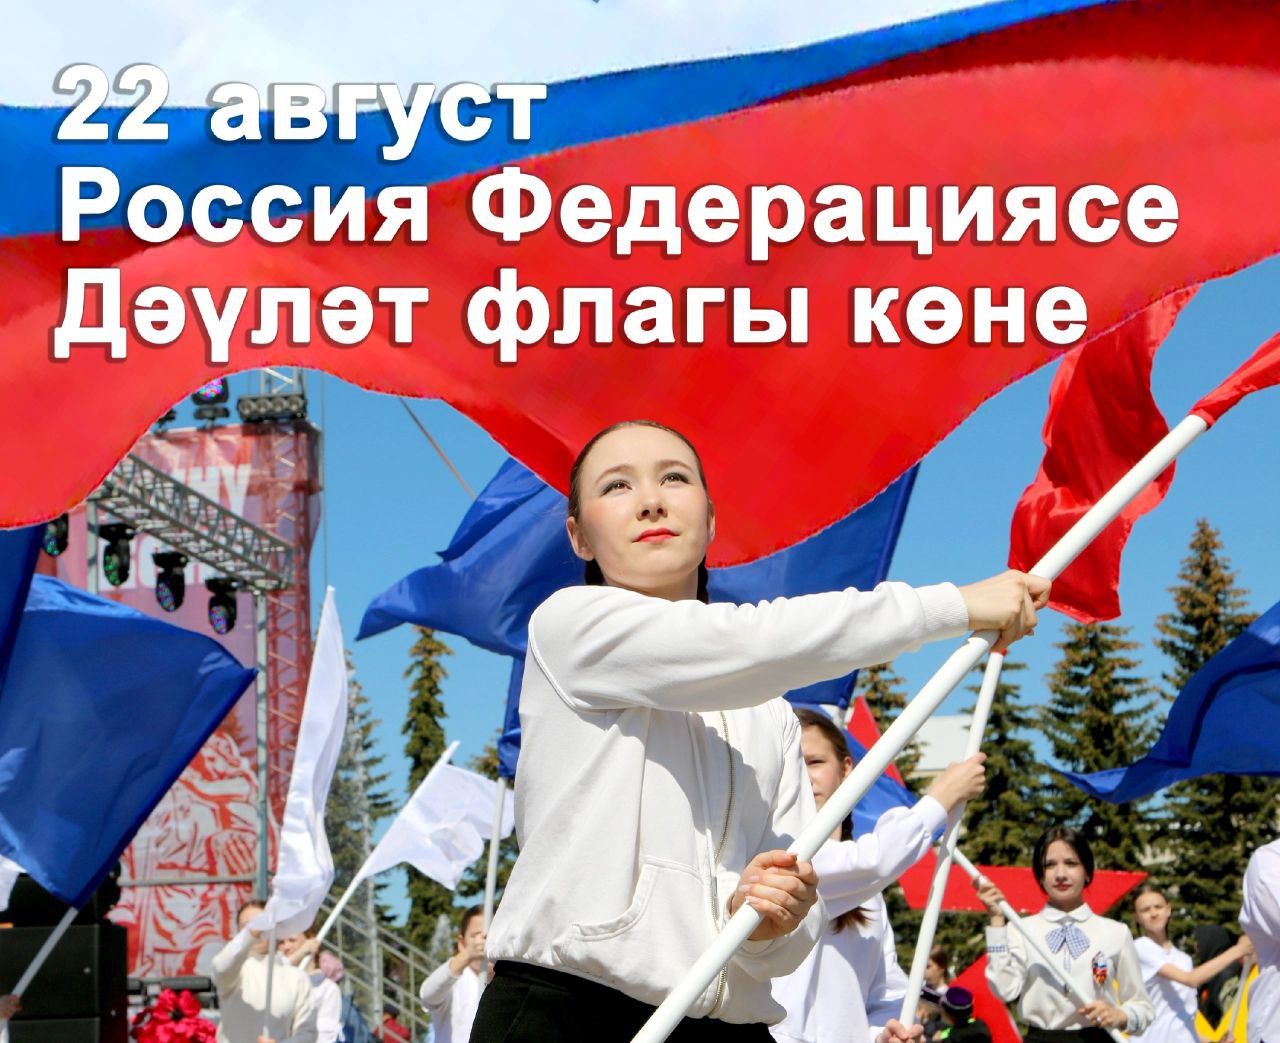 Россия Федерациясе Дәүләт флагы көне белән!